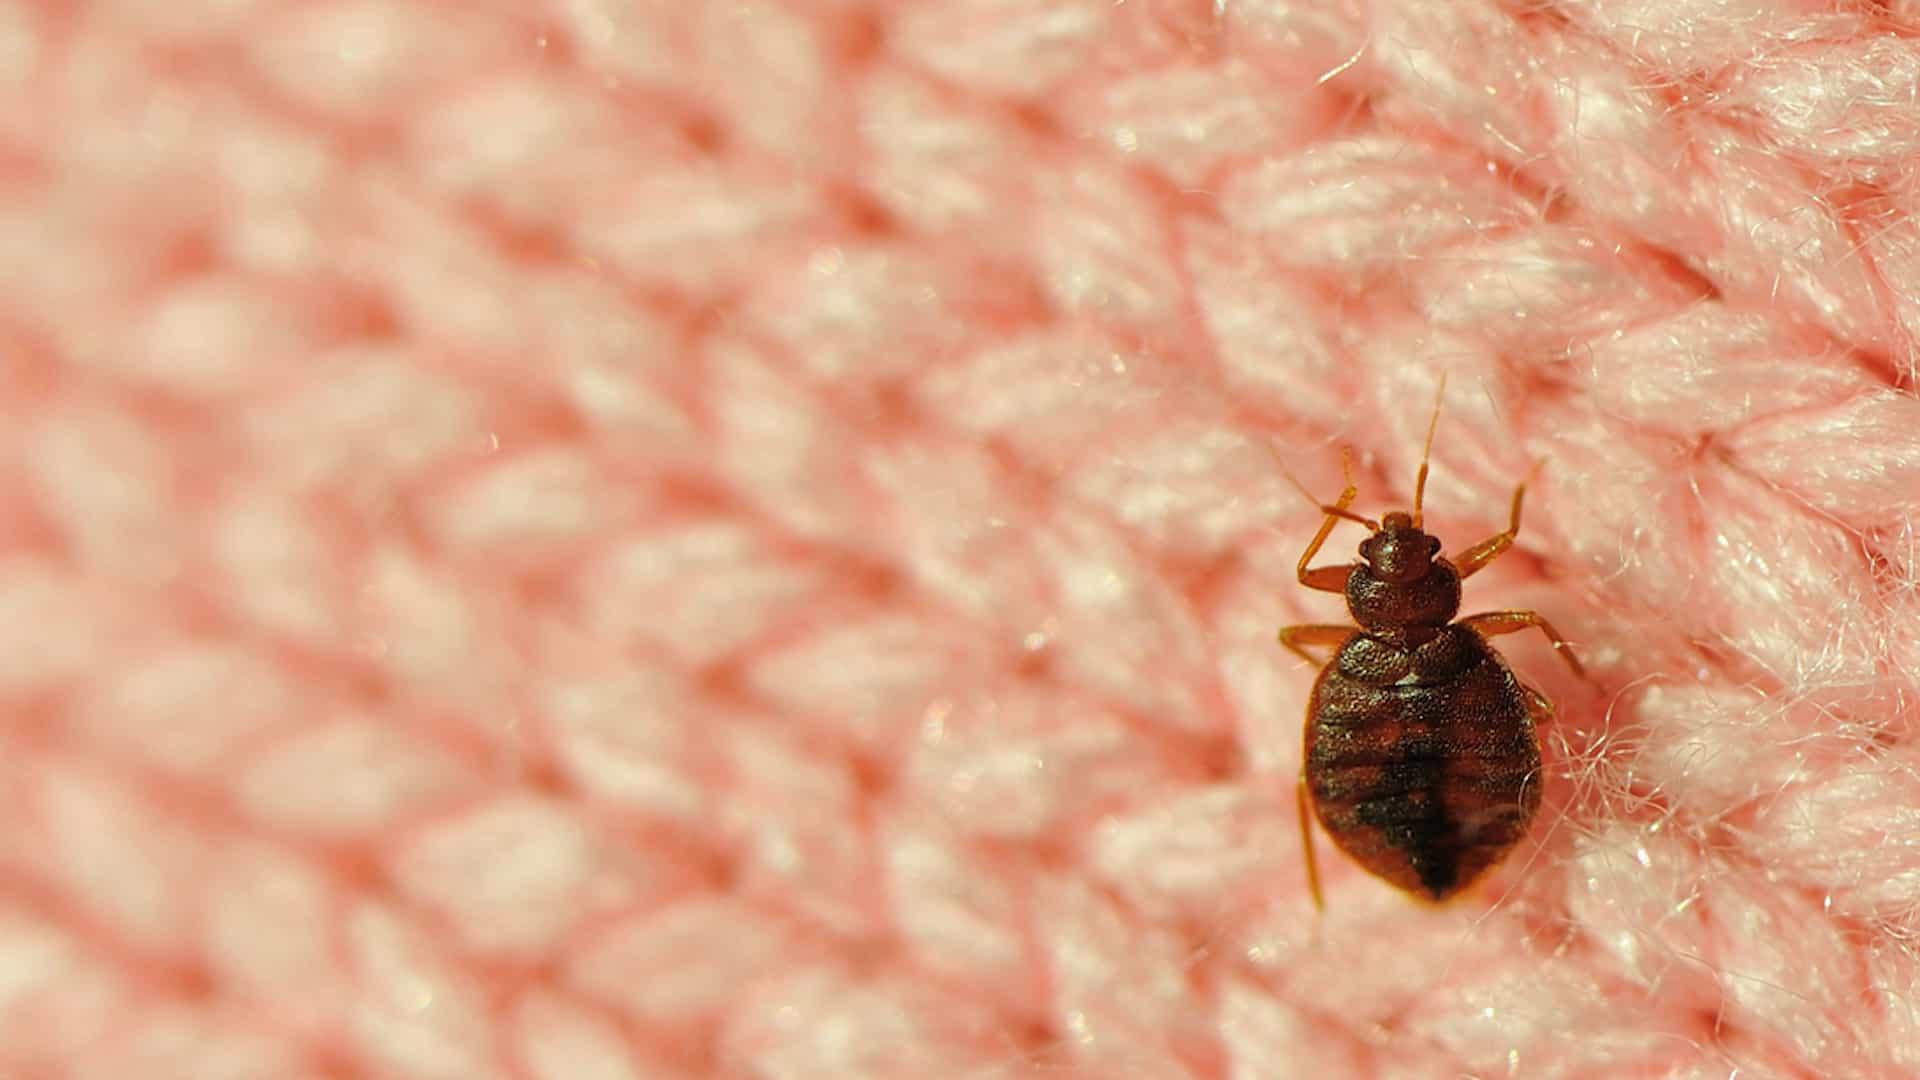 Bedbugs - scariest animal